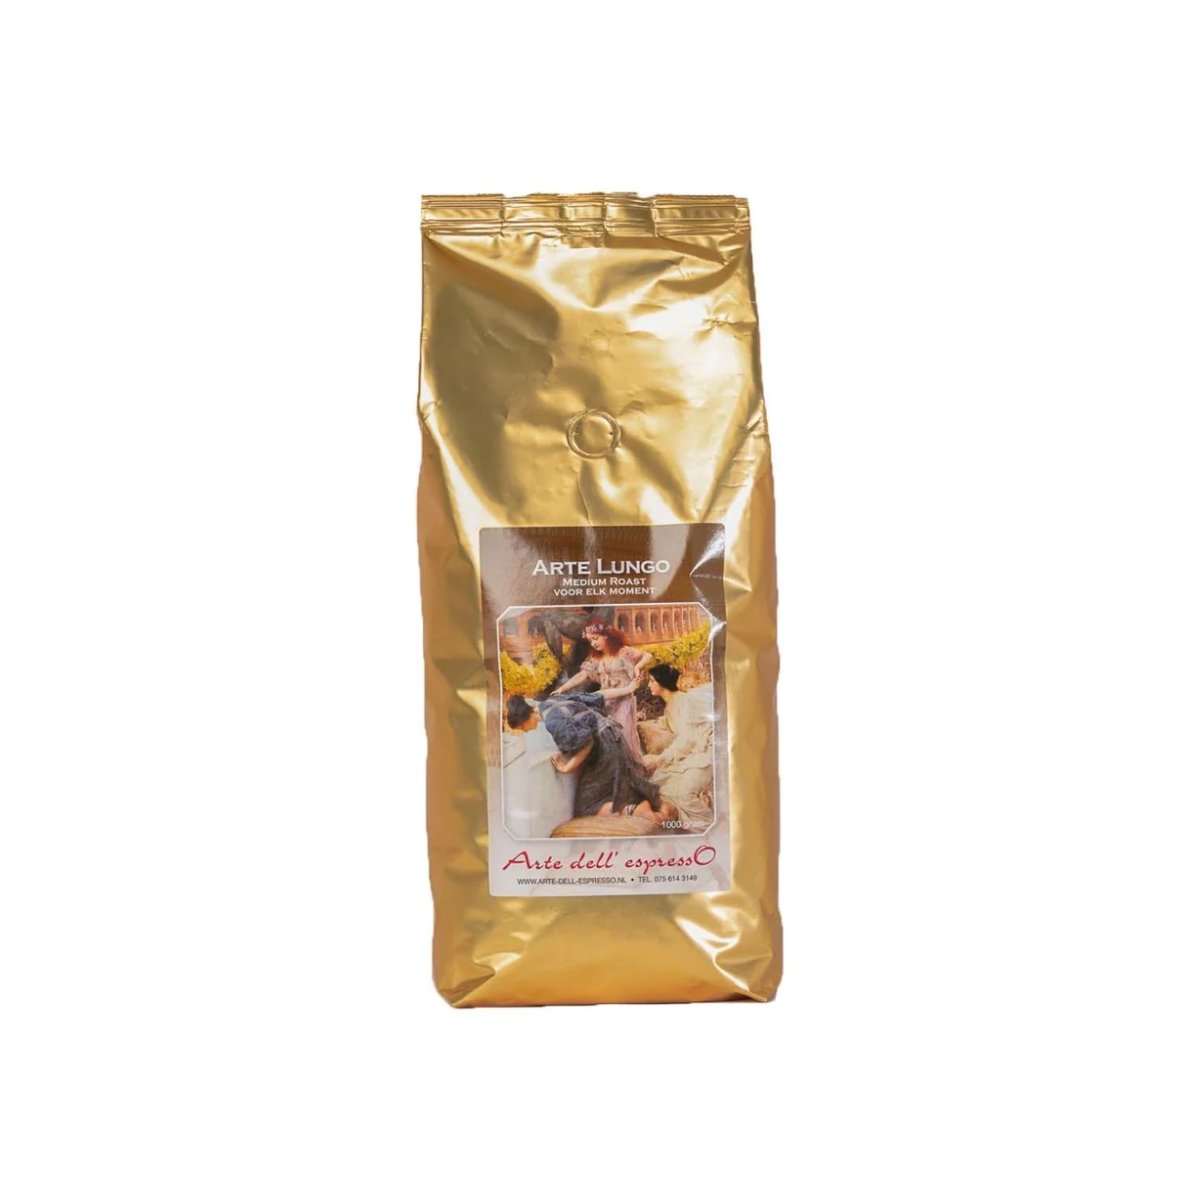 Arte Lungo arabica koffiebonen medium roast 1 kilogram in gouden verpakking van Arte dell' espressO 6096530852831